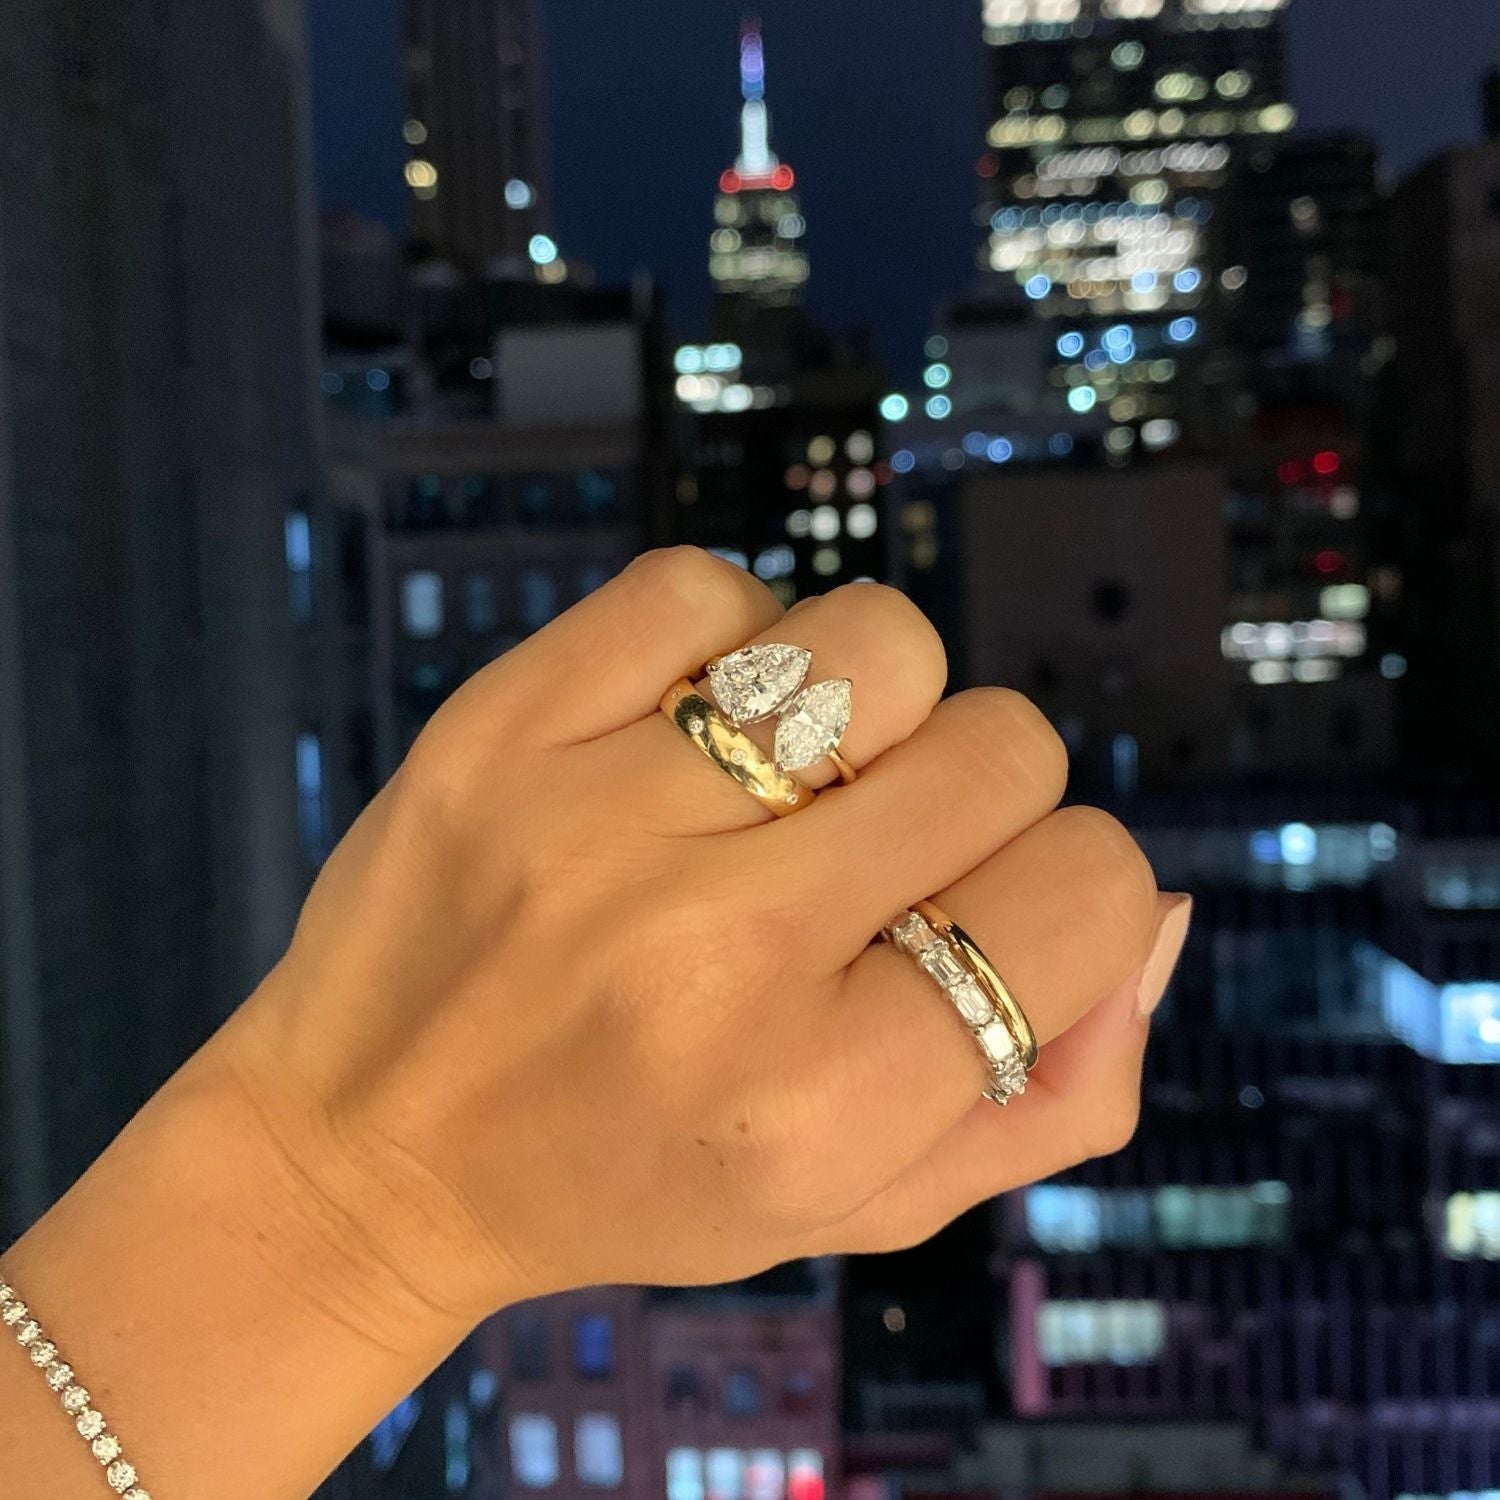 Vintage romantic diamond engagement ring a so-called toi et moi